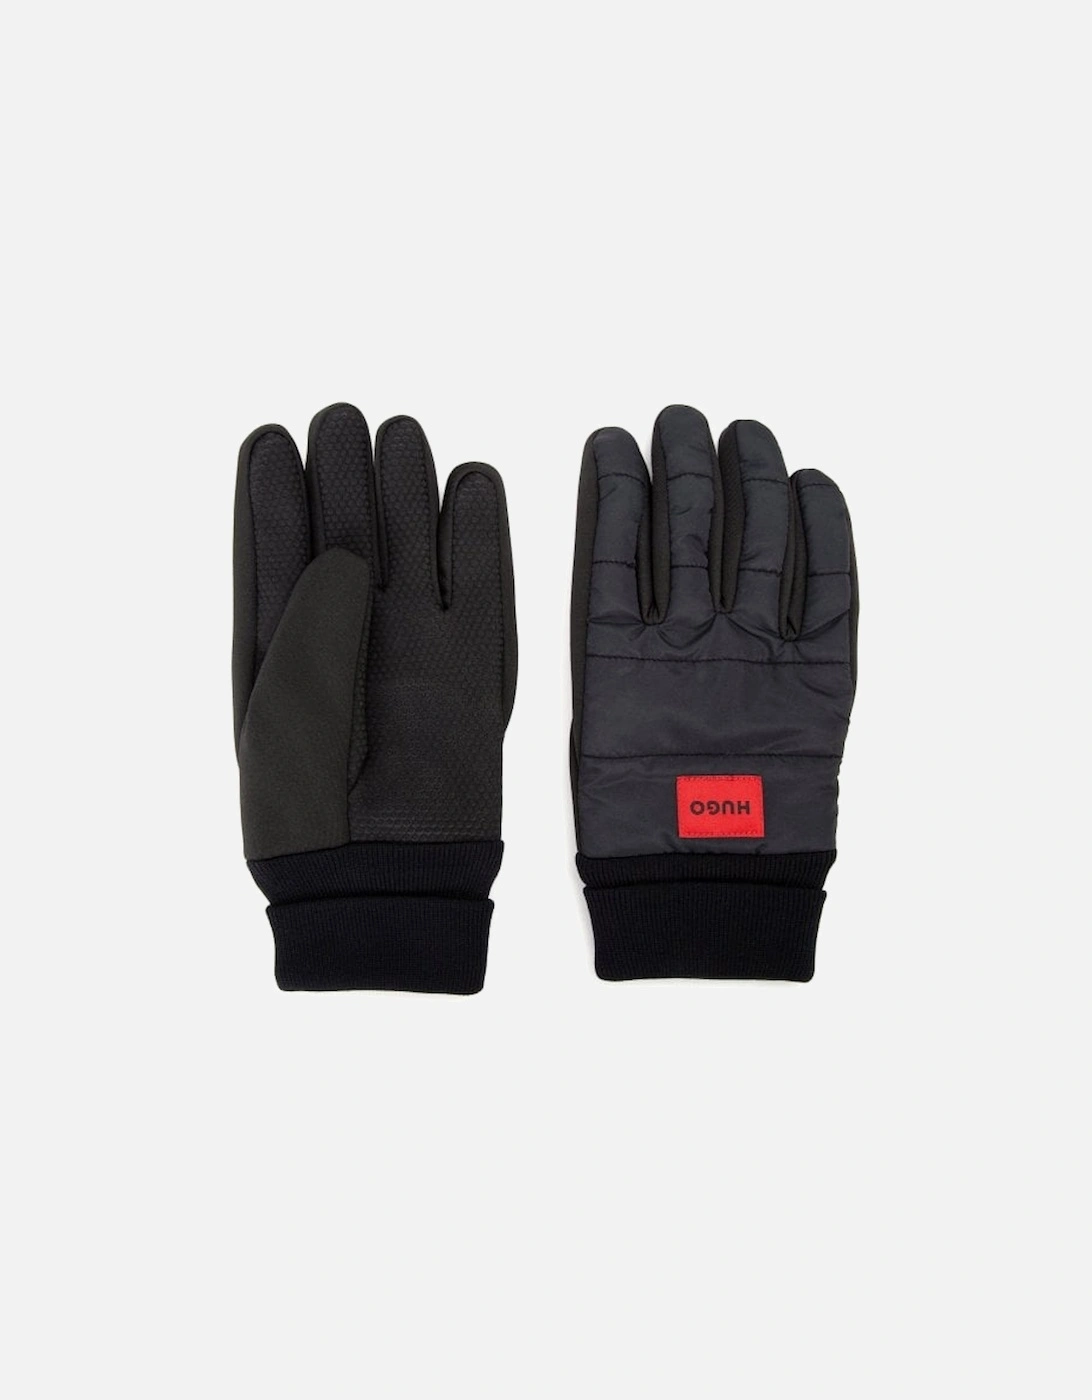 Jakota Red Label Touchscreen-Friendly Winter Gloves, Black, 3 of 2